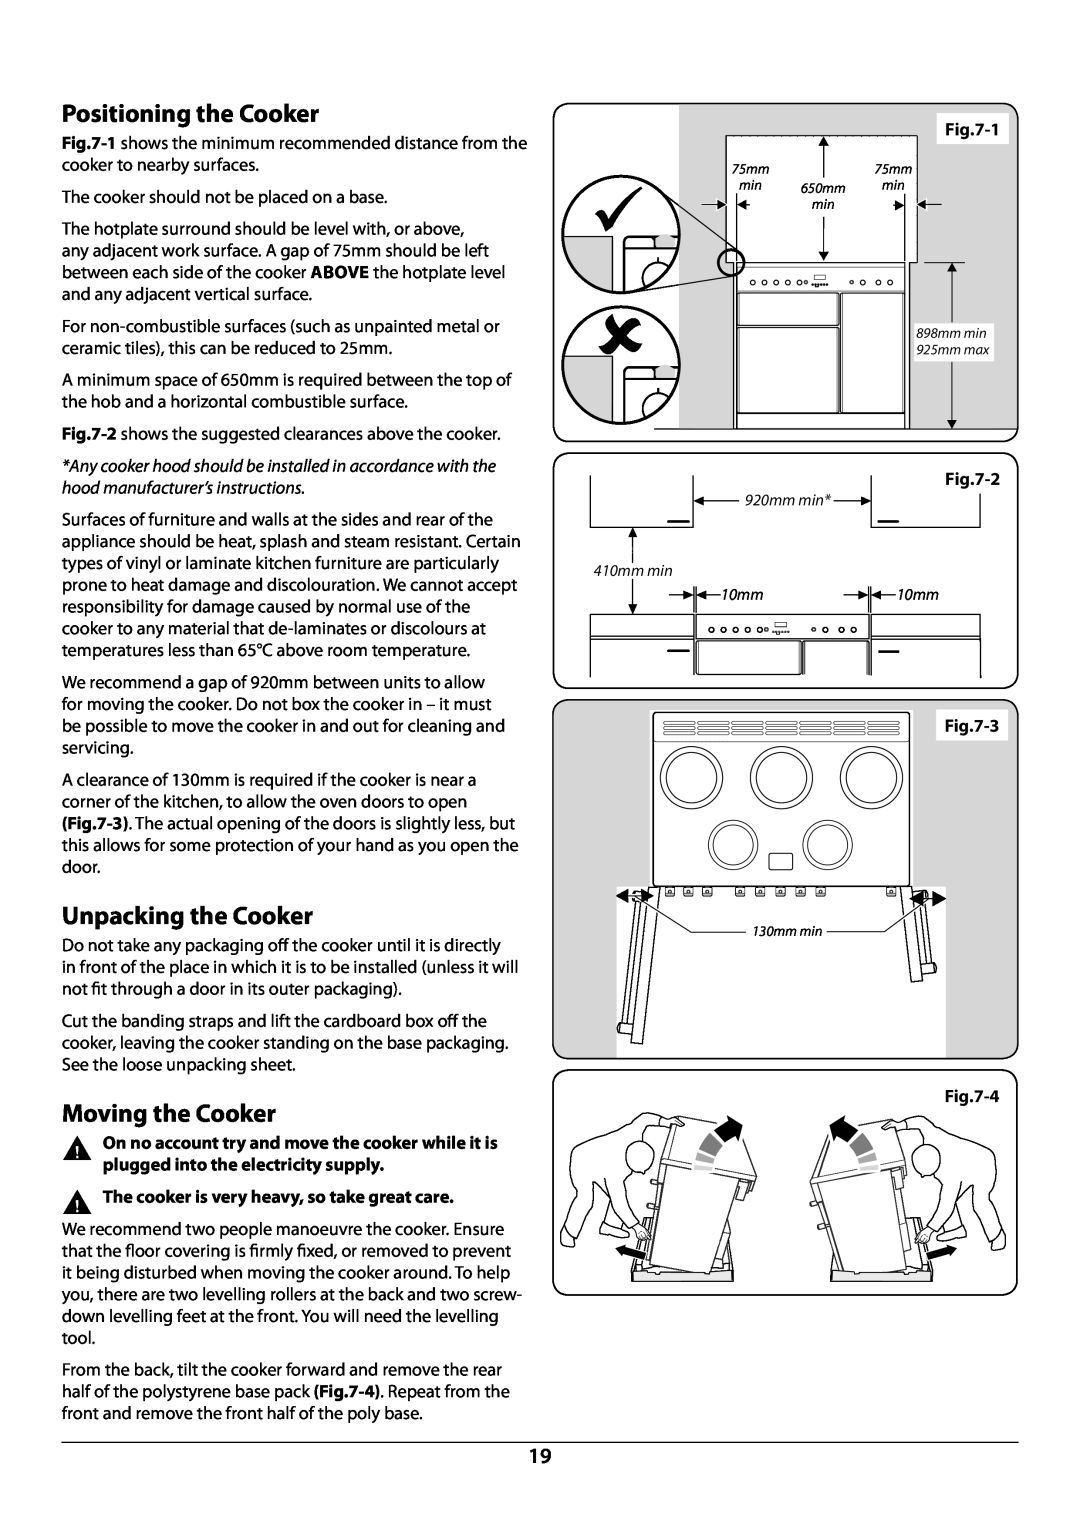 Rangemaster U109952 - 02 manual Positioning the Cooker, Unpacking the Cooker, Moving the Cooker 